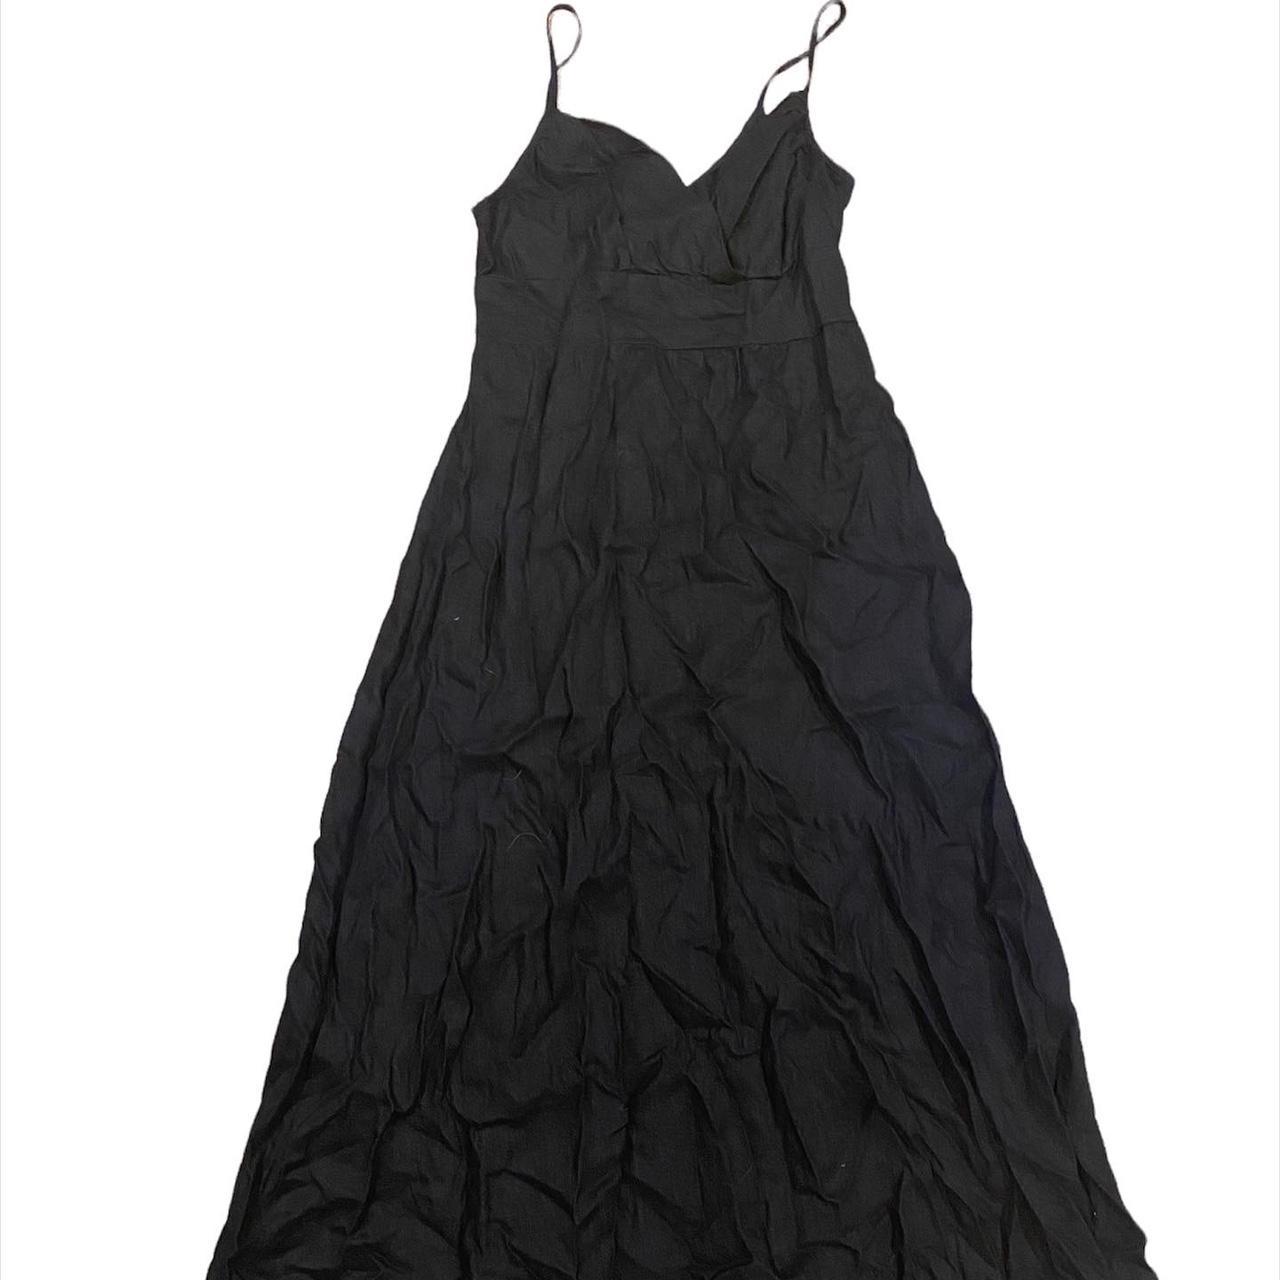 Mossimo Women's Black Dress